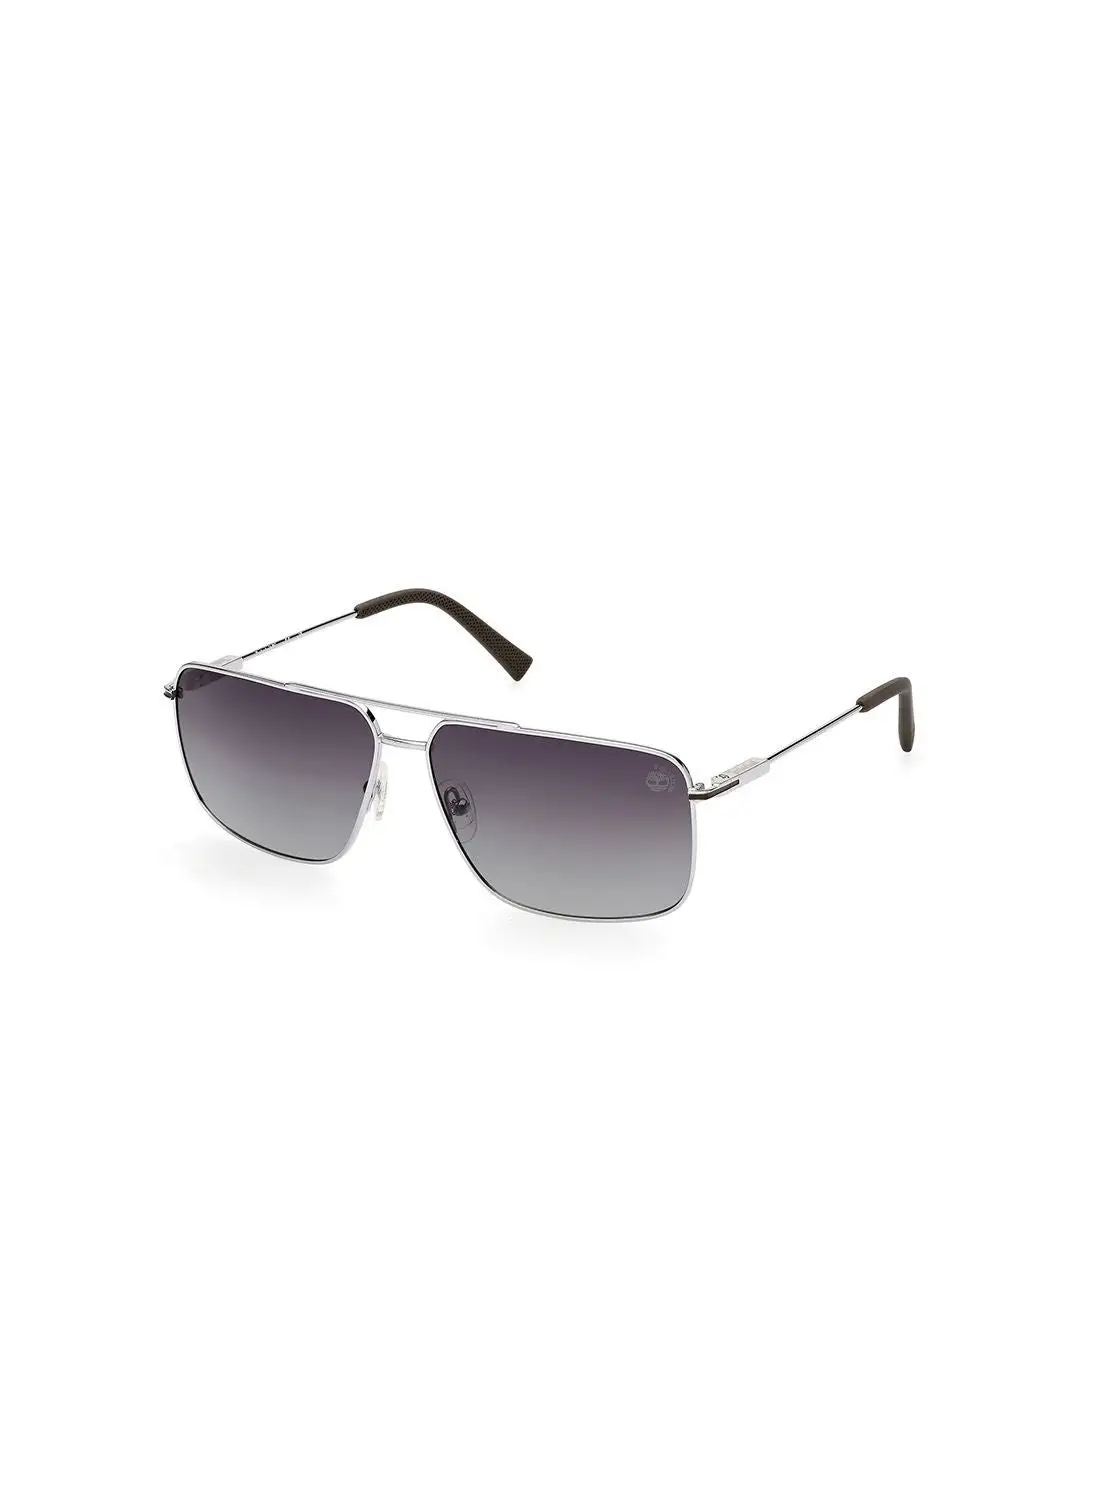 Timberland Men's Polarized Navigator Sunglasses - TB929208R61 - Lens Size: 61 Mm